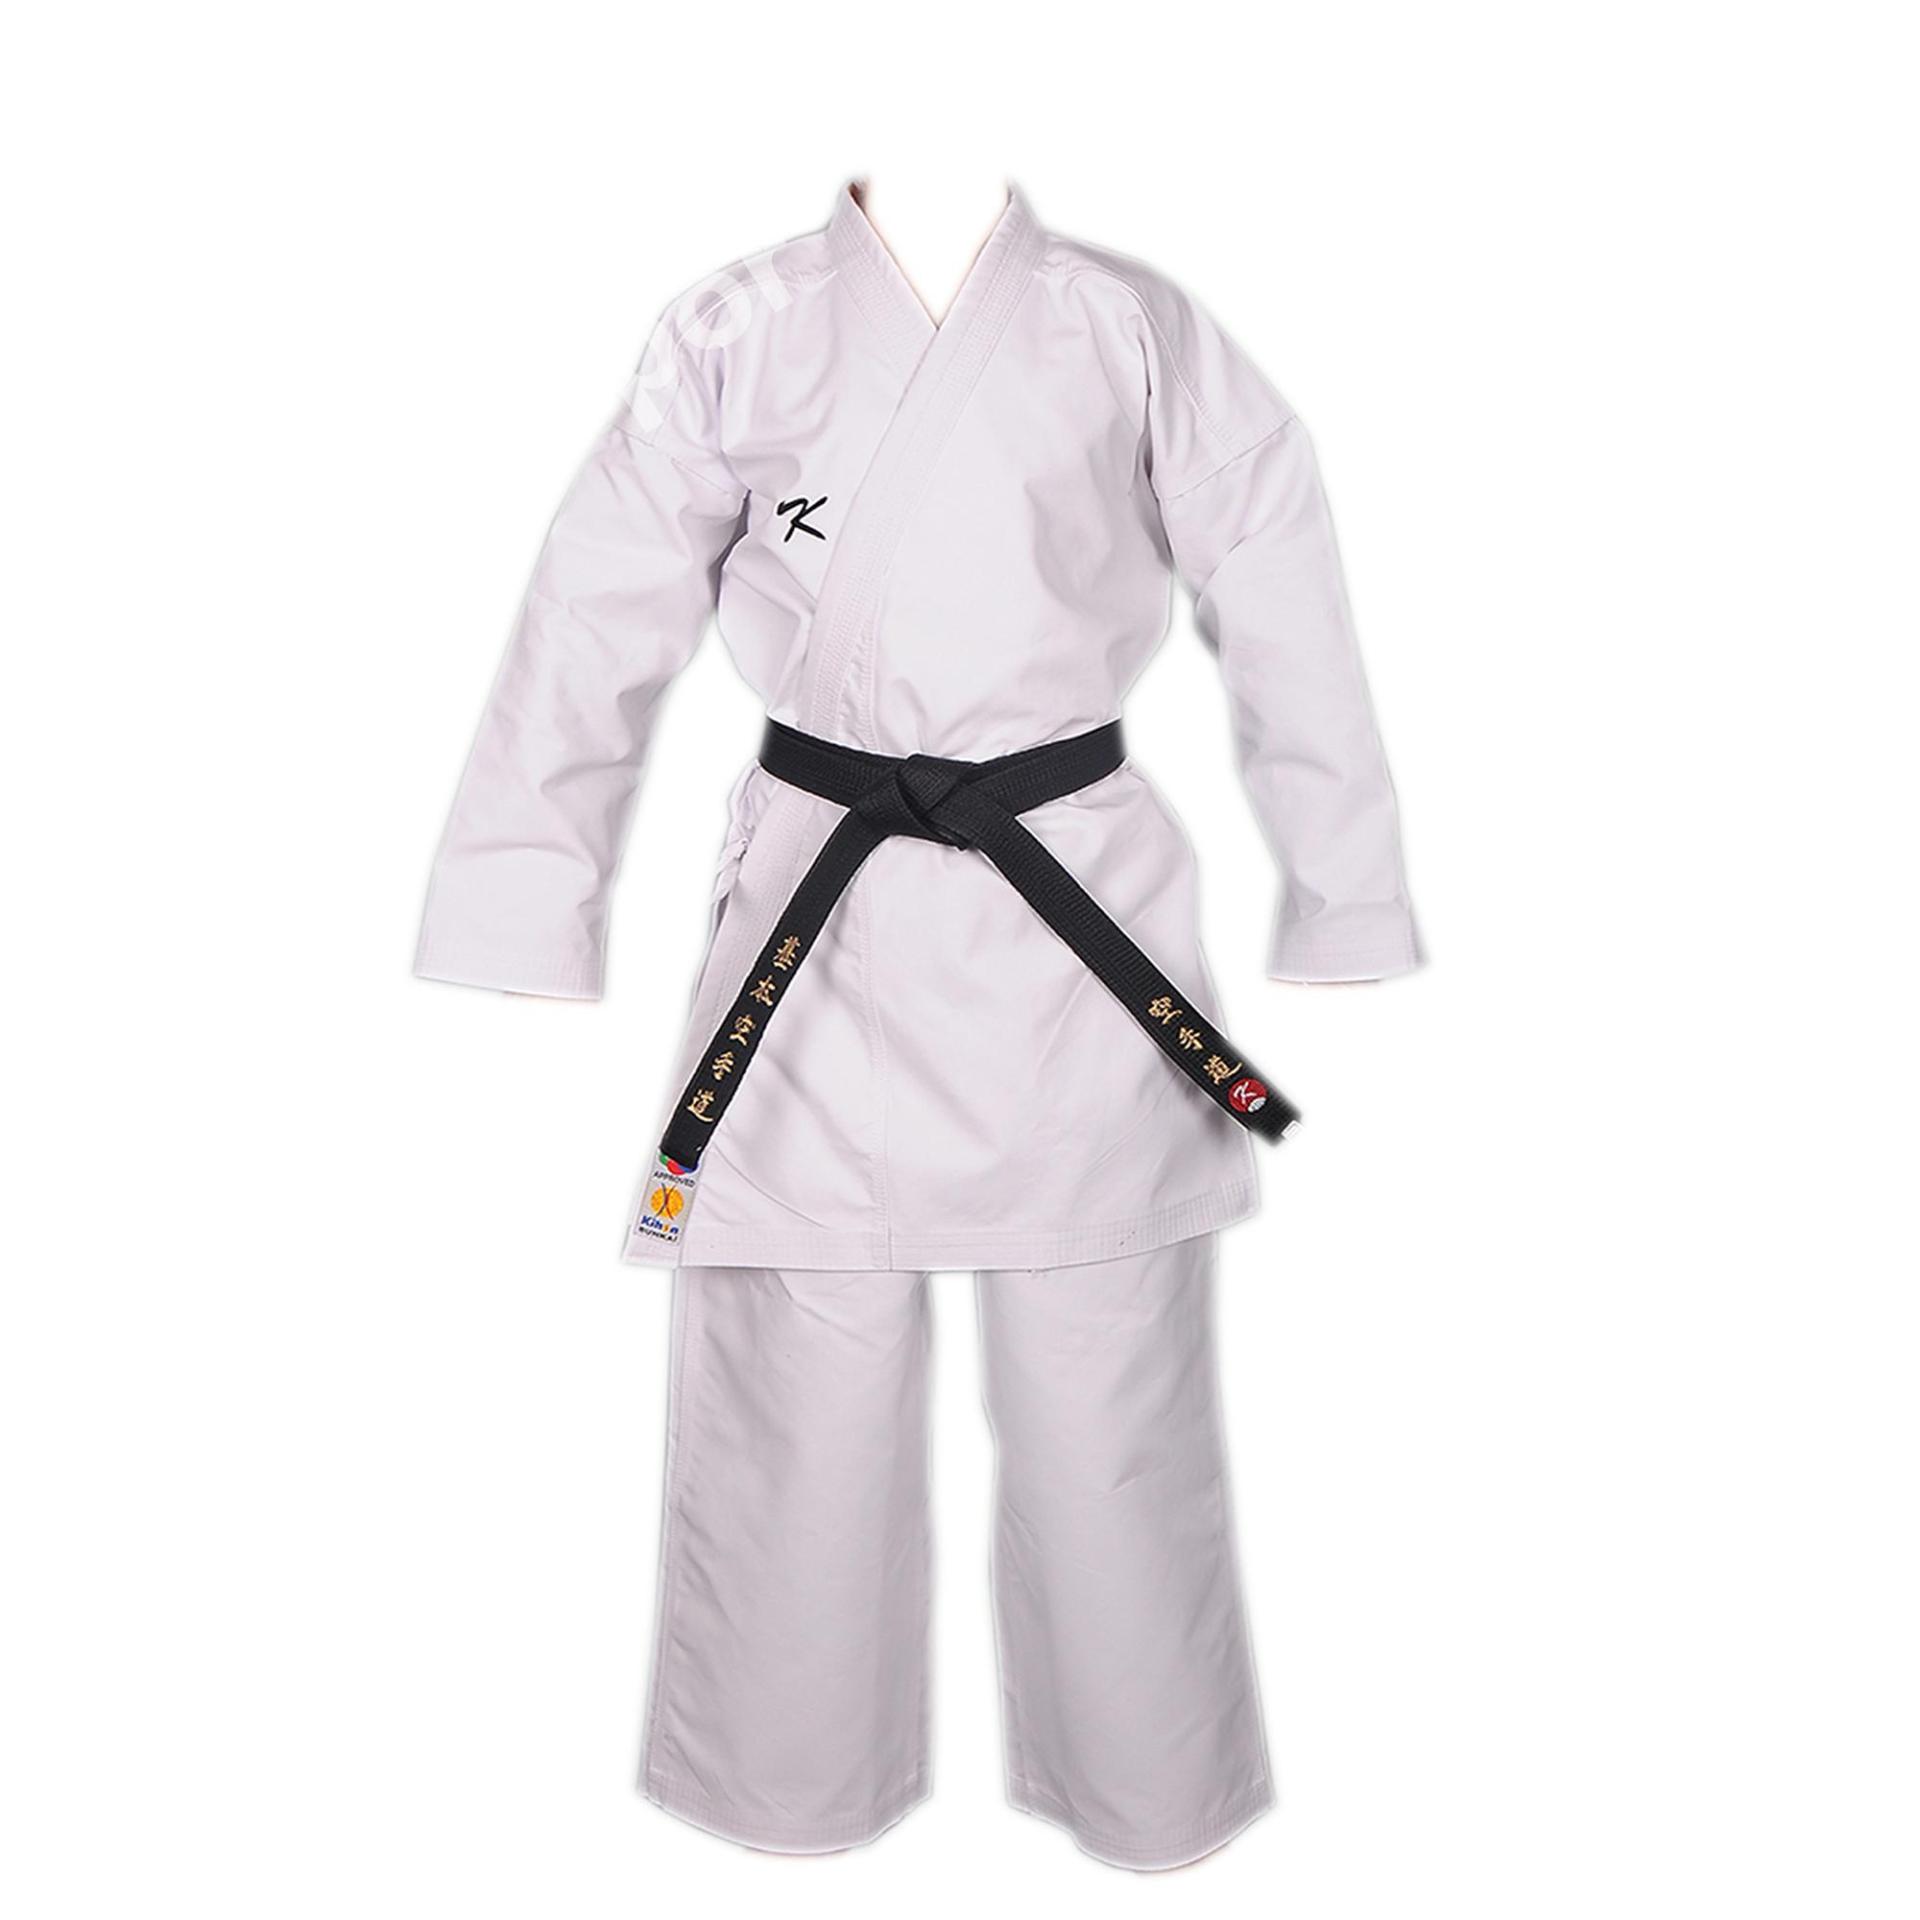 B kihon bunkai karate elbisesi wkf 16327493576591